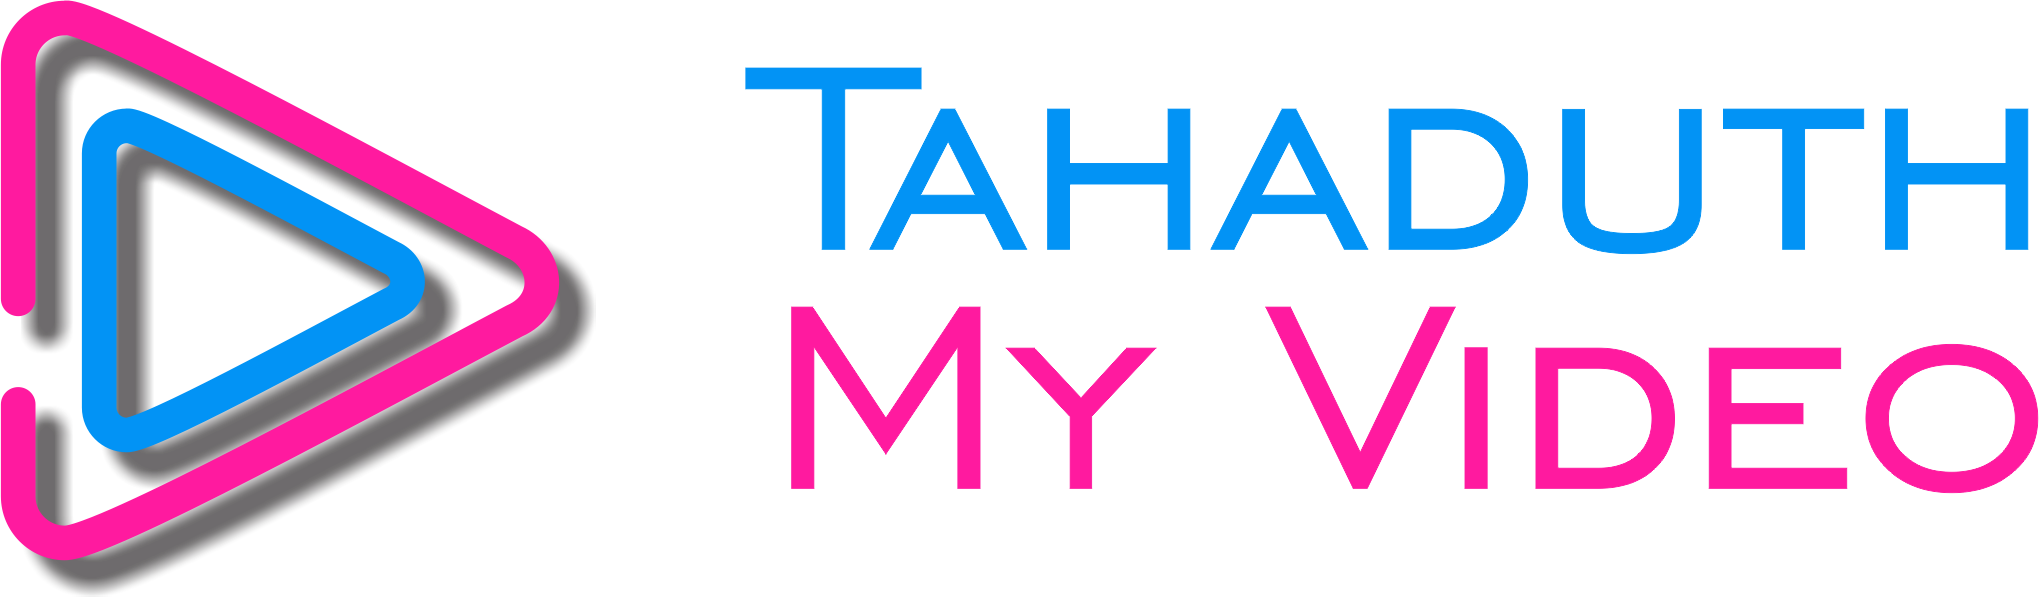 Tahaduth my video